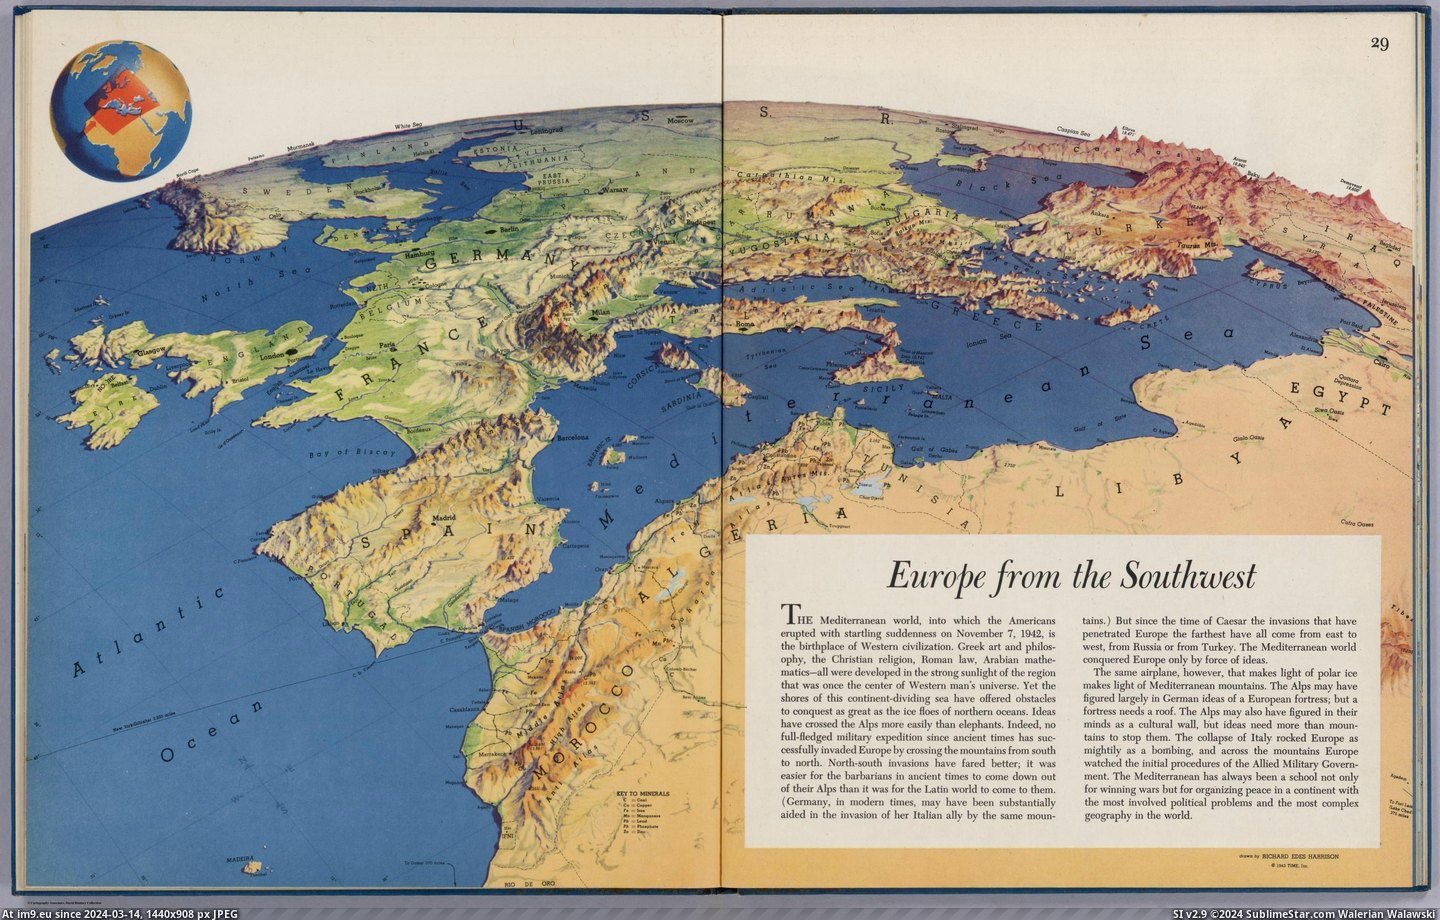 #Europe  #Southwest [Mapporn] Europe from the Southwest [2748 x 1744] Pic. (Bild von album My r/MAPS favs))